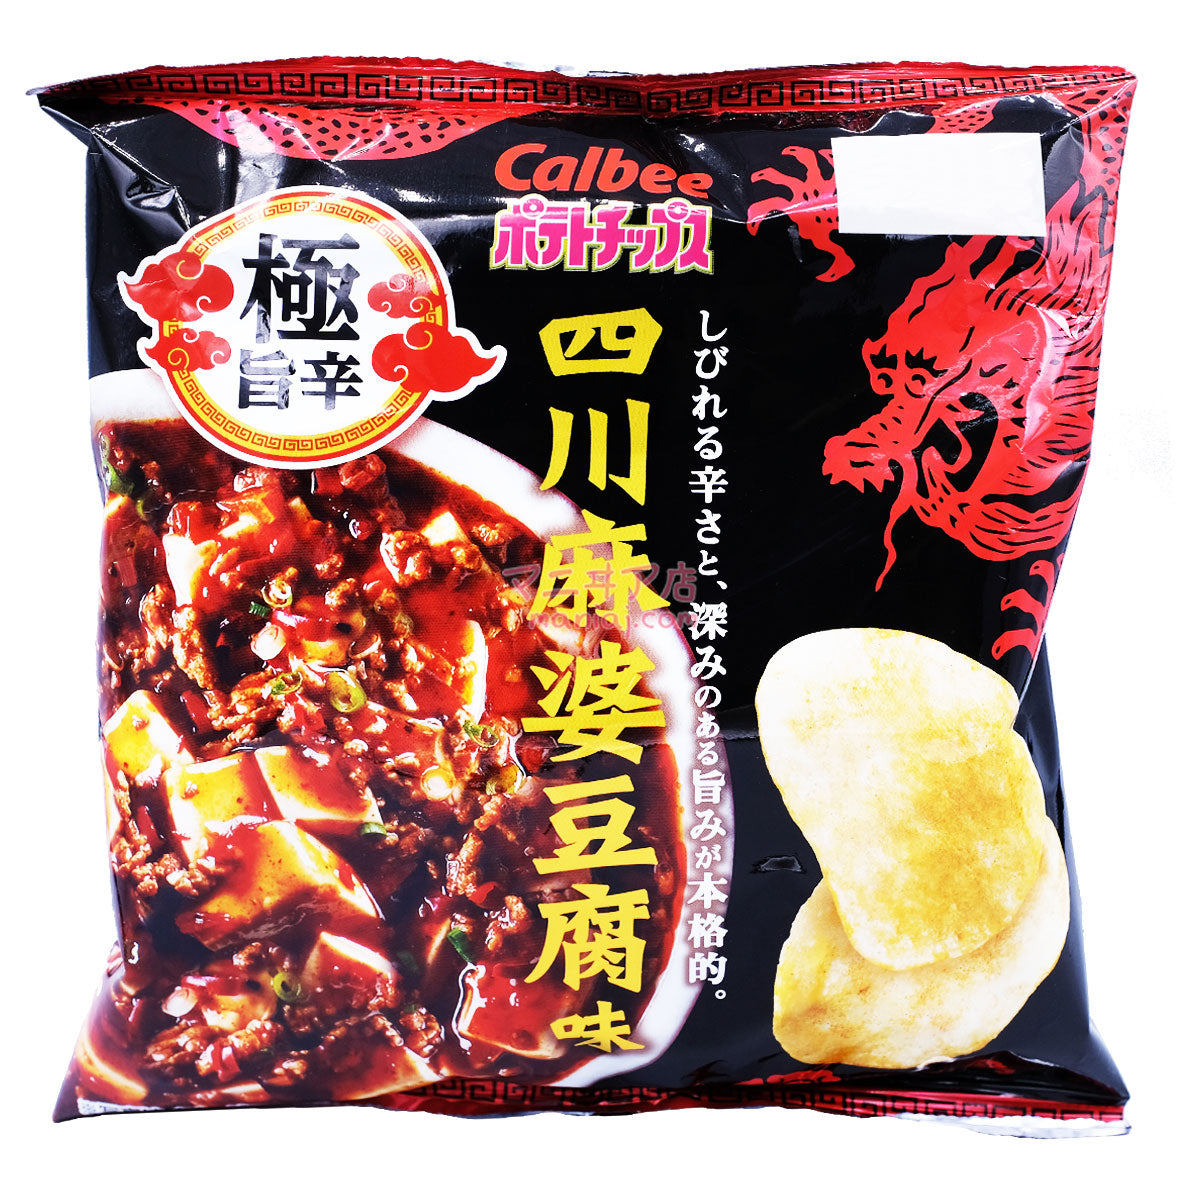 Delicious Spicy Sichuan Mapo Tofu Flavor Potato Chips